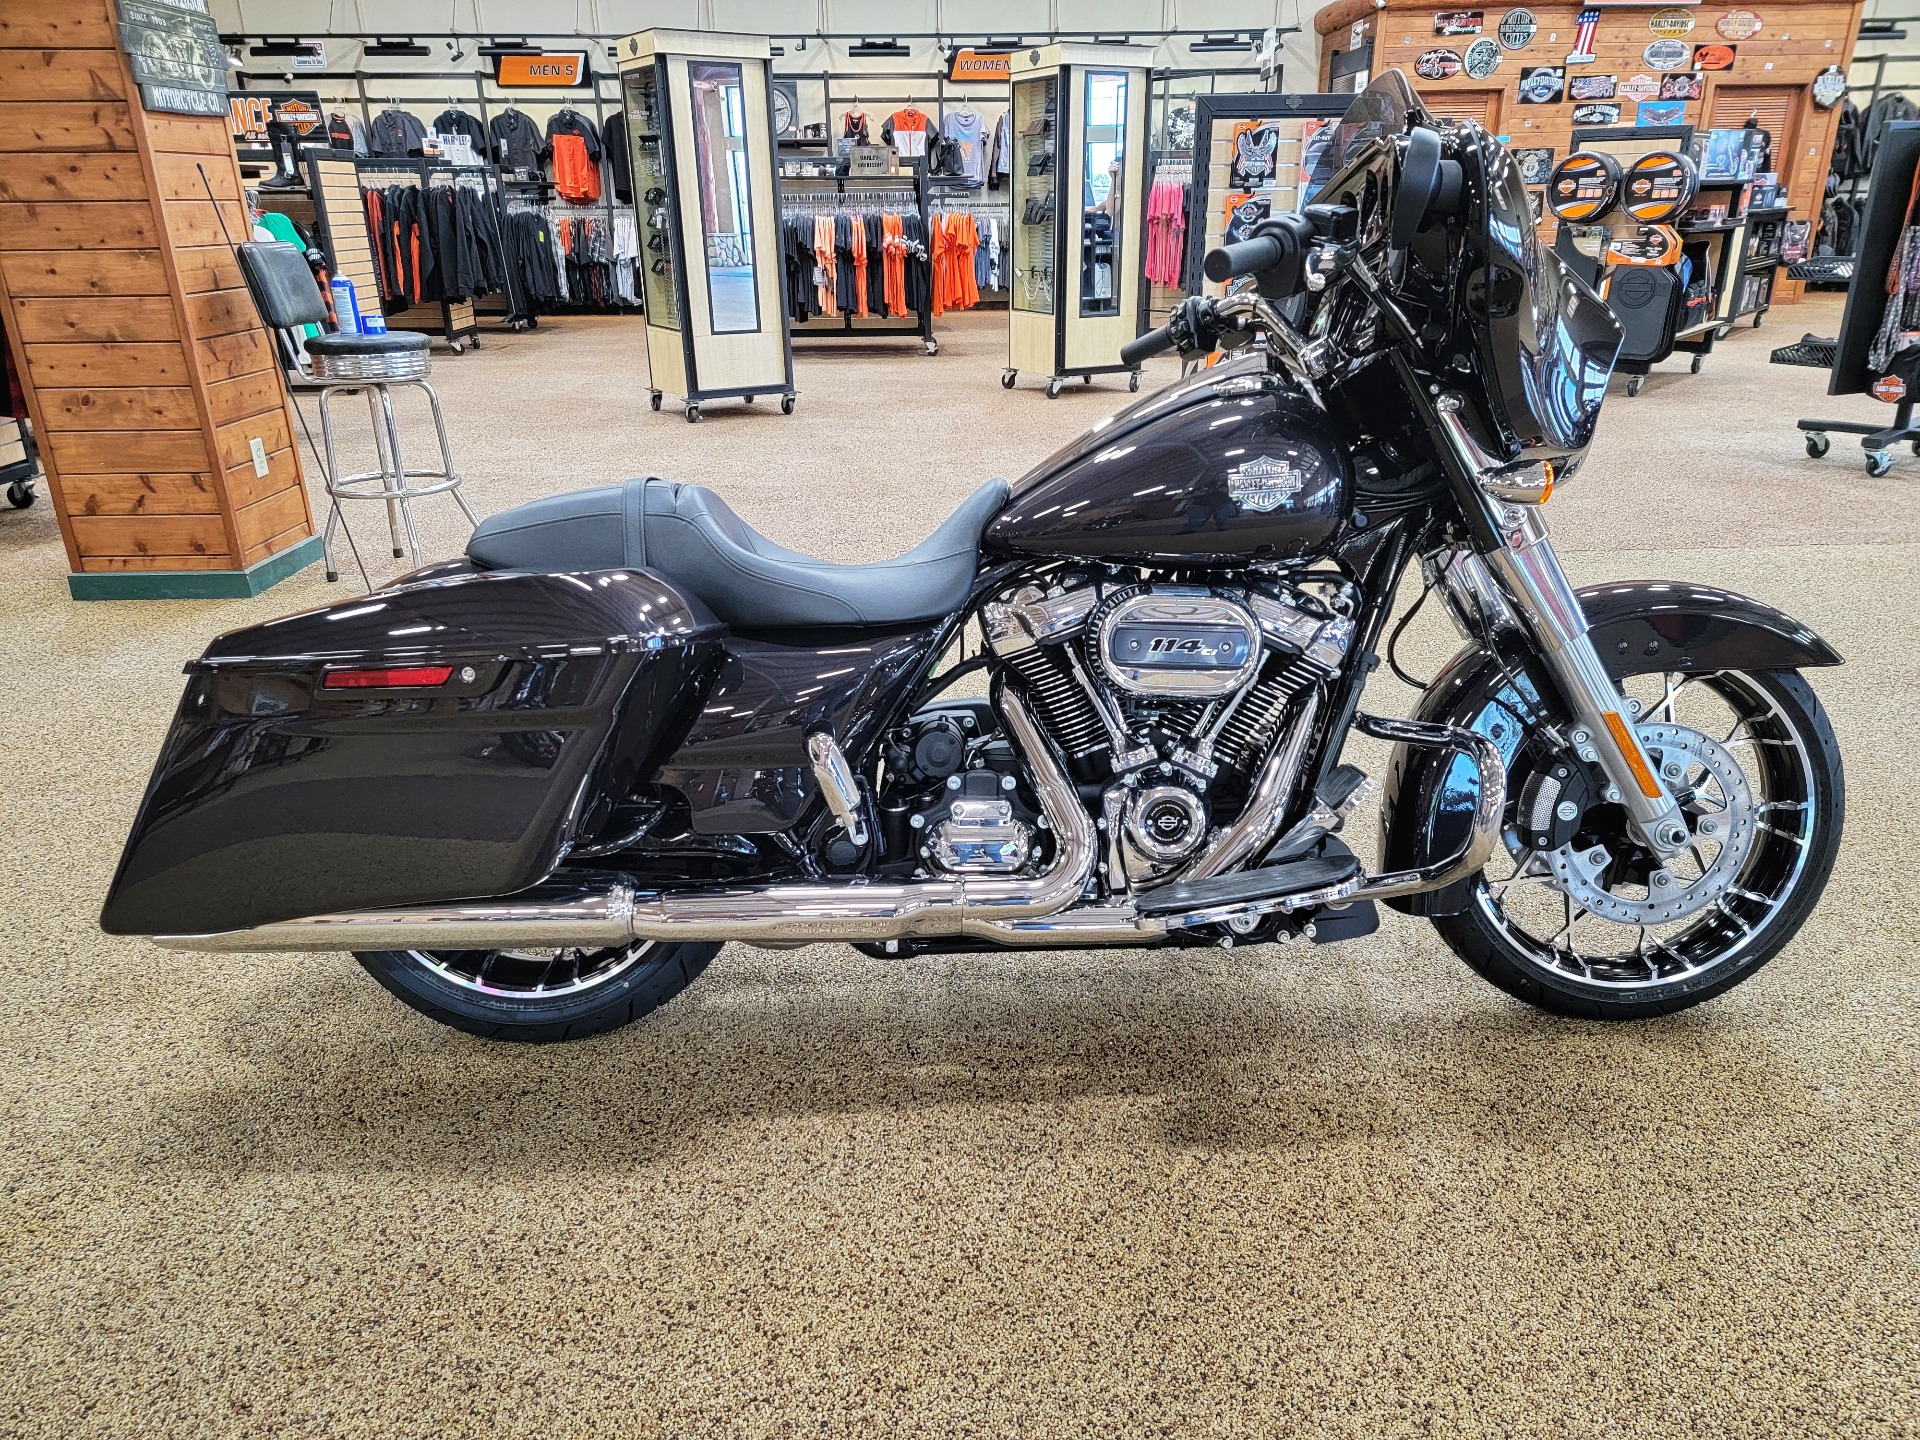 New 2021 Harley Davidson Street Glide Special Black Jack Metallic Chrome Option Motorcycles In Sauk Rapids Mn Fl624973